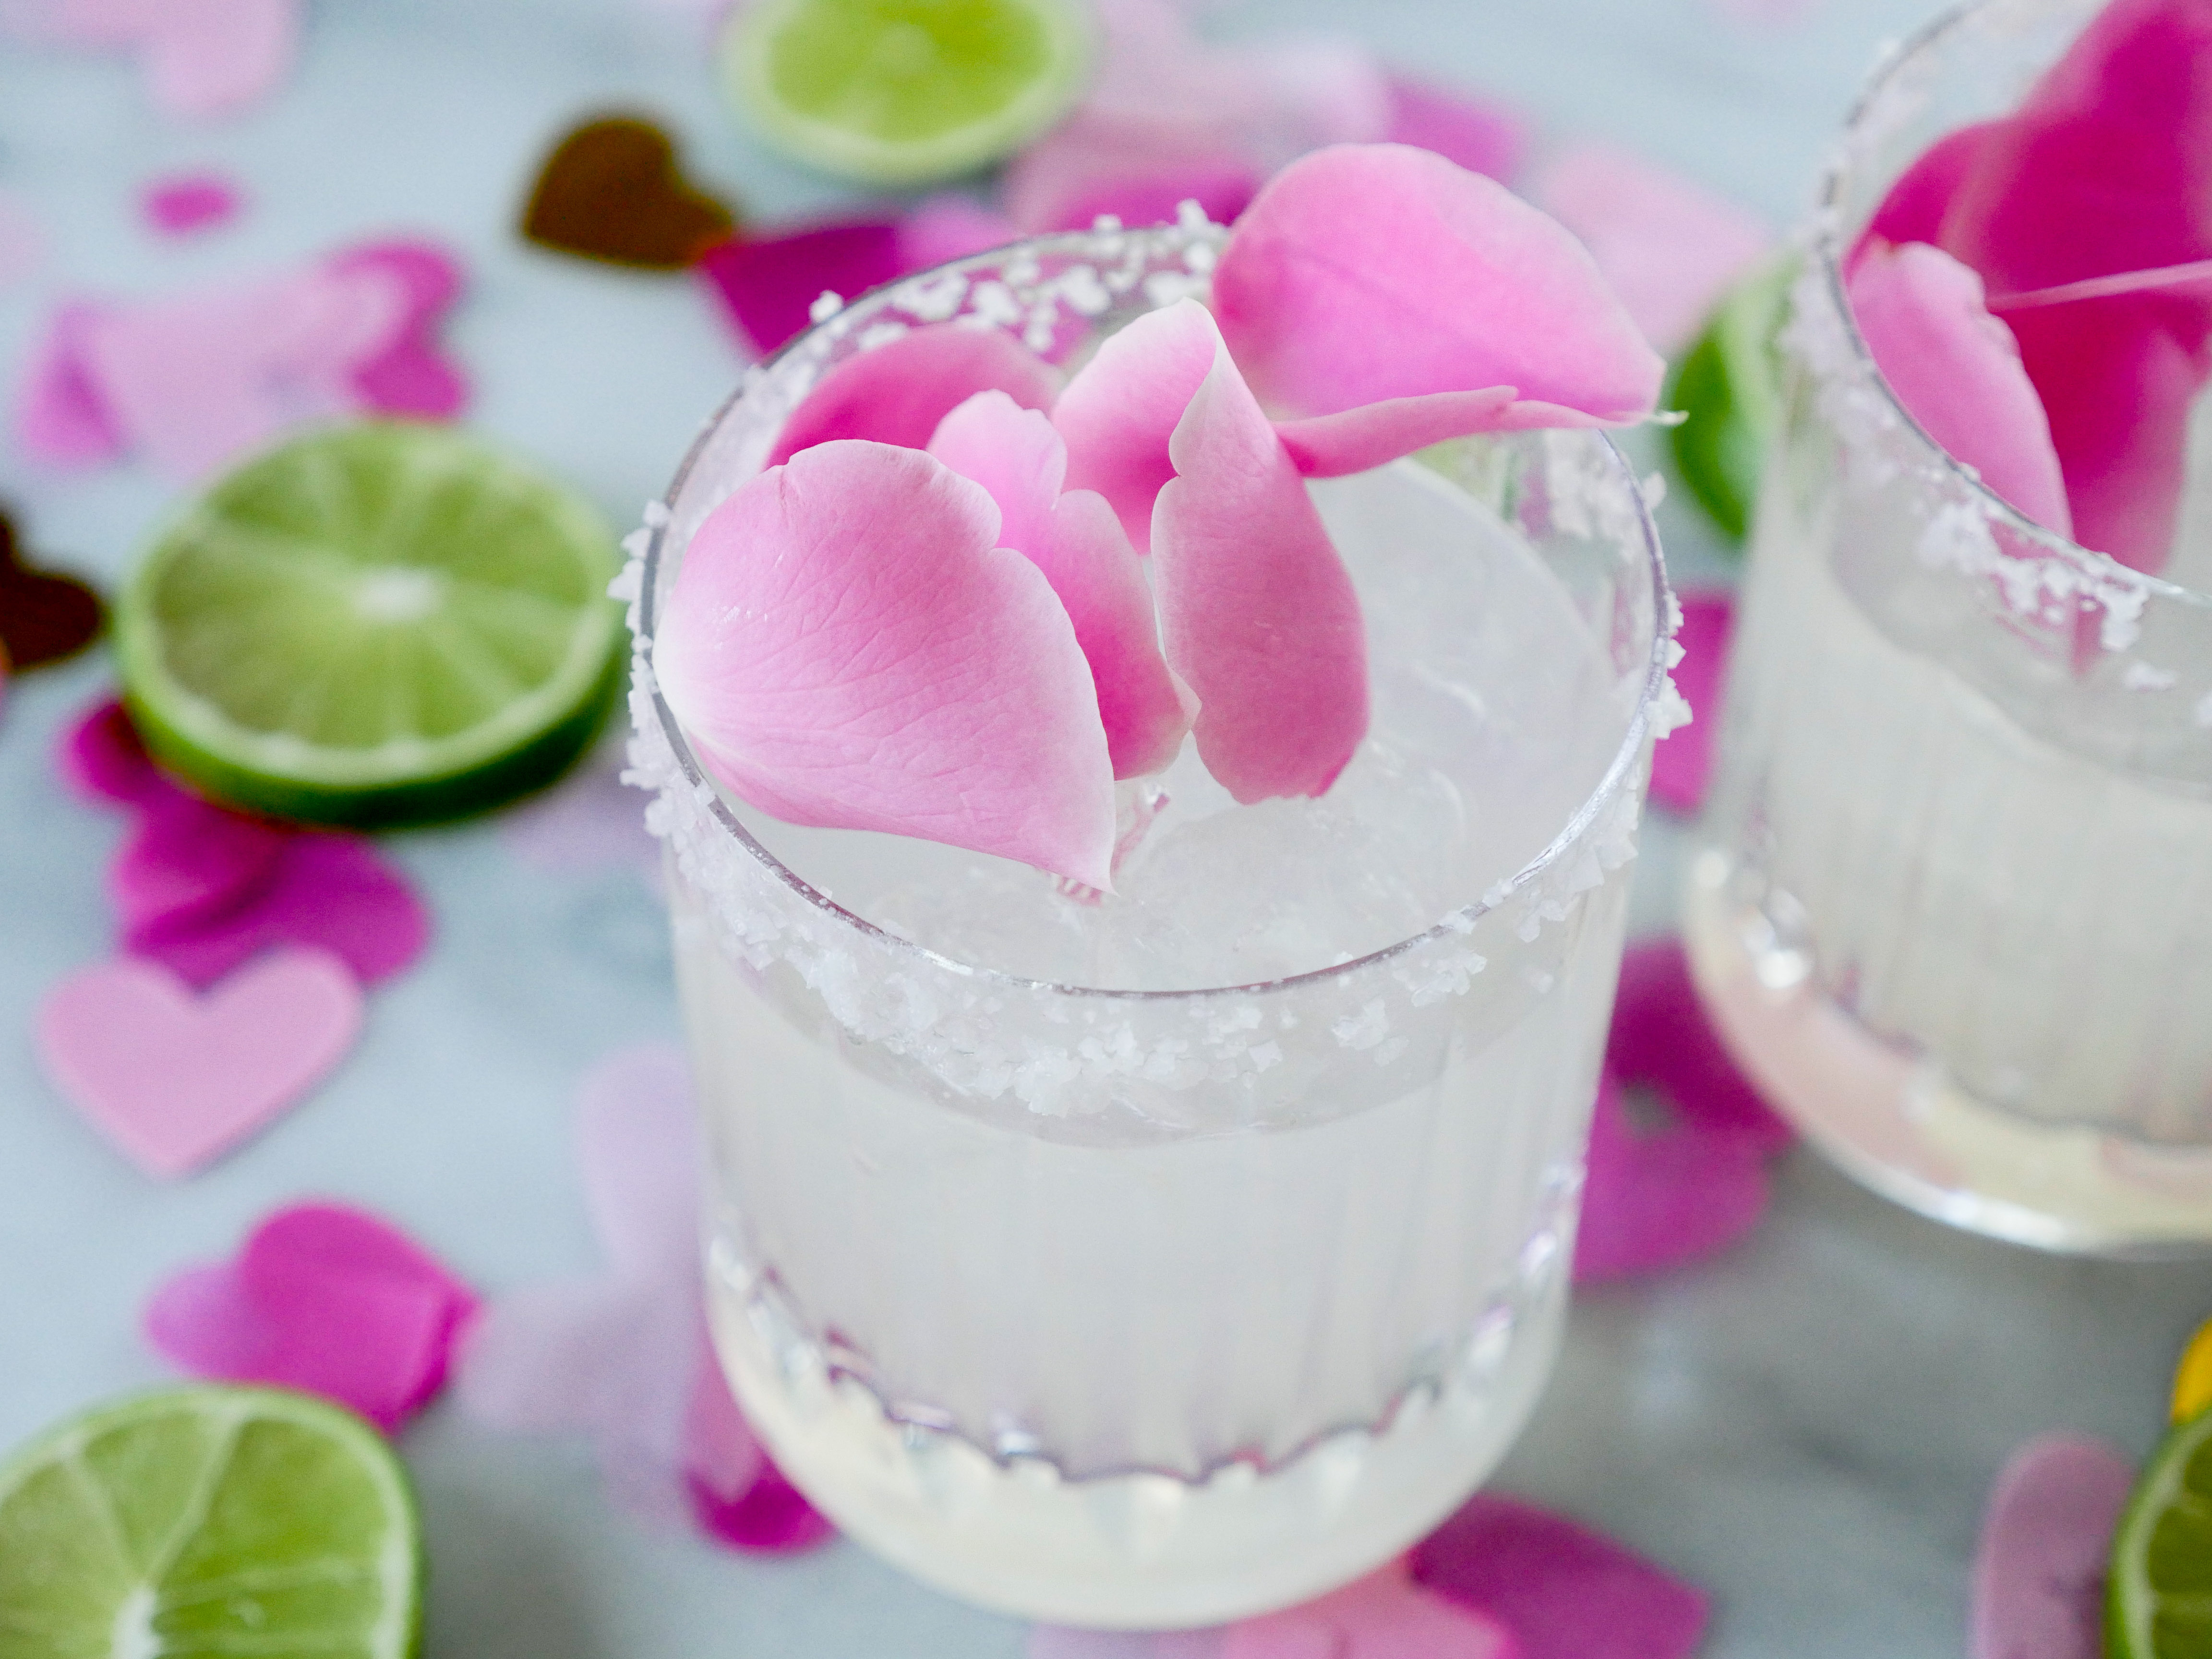 Eva Amurri shares a Rosewater Margarita recipe for Valentine's Day